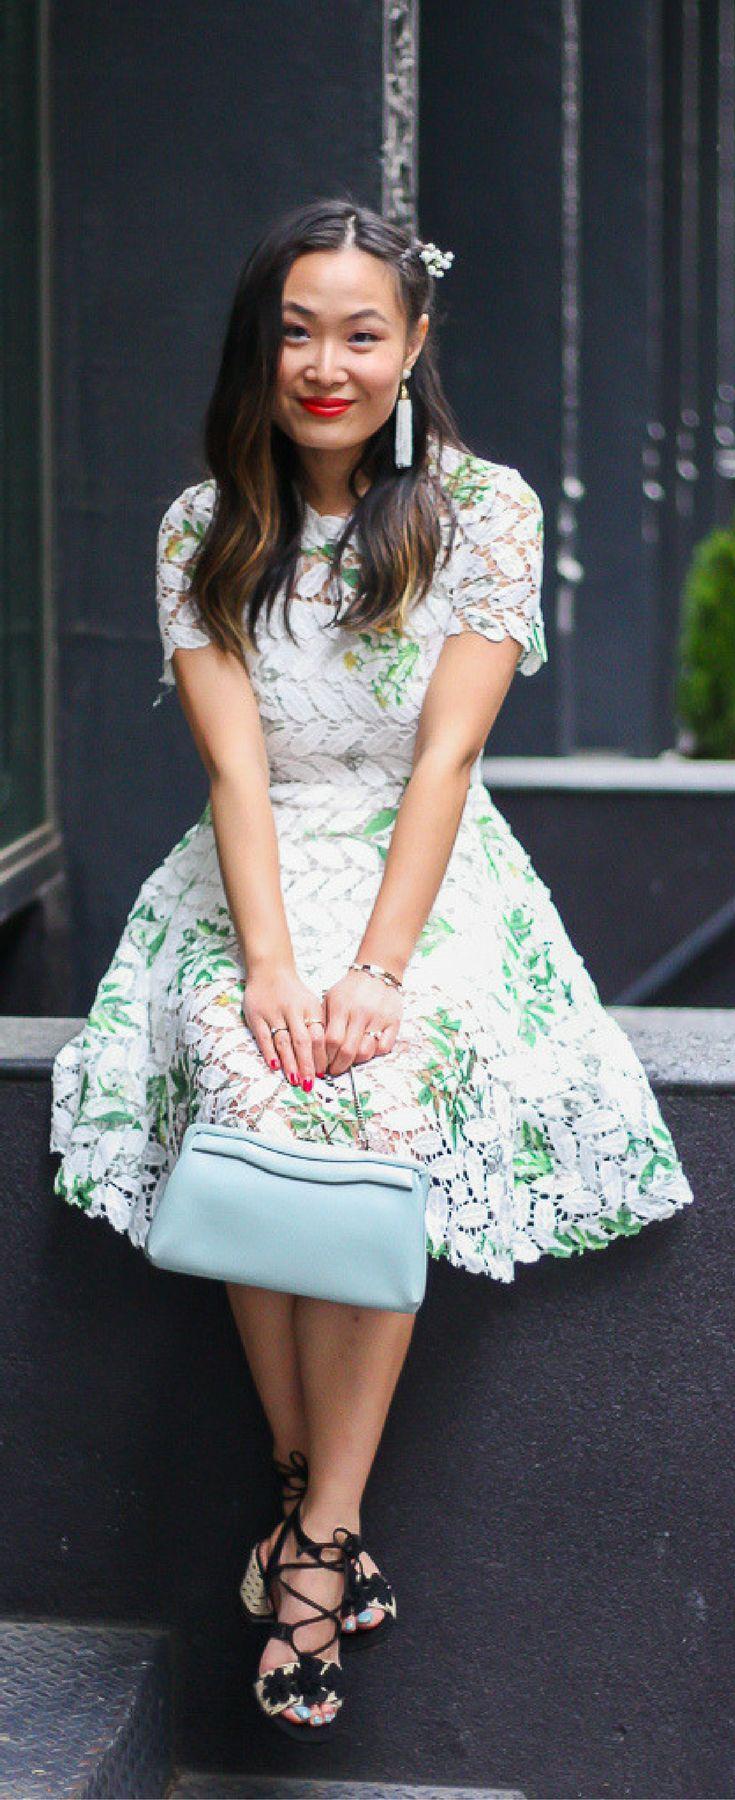 Wedding - How To Look Feminine: White Crochet Dress